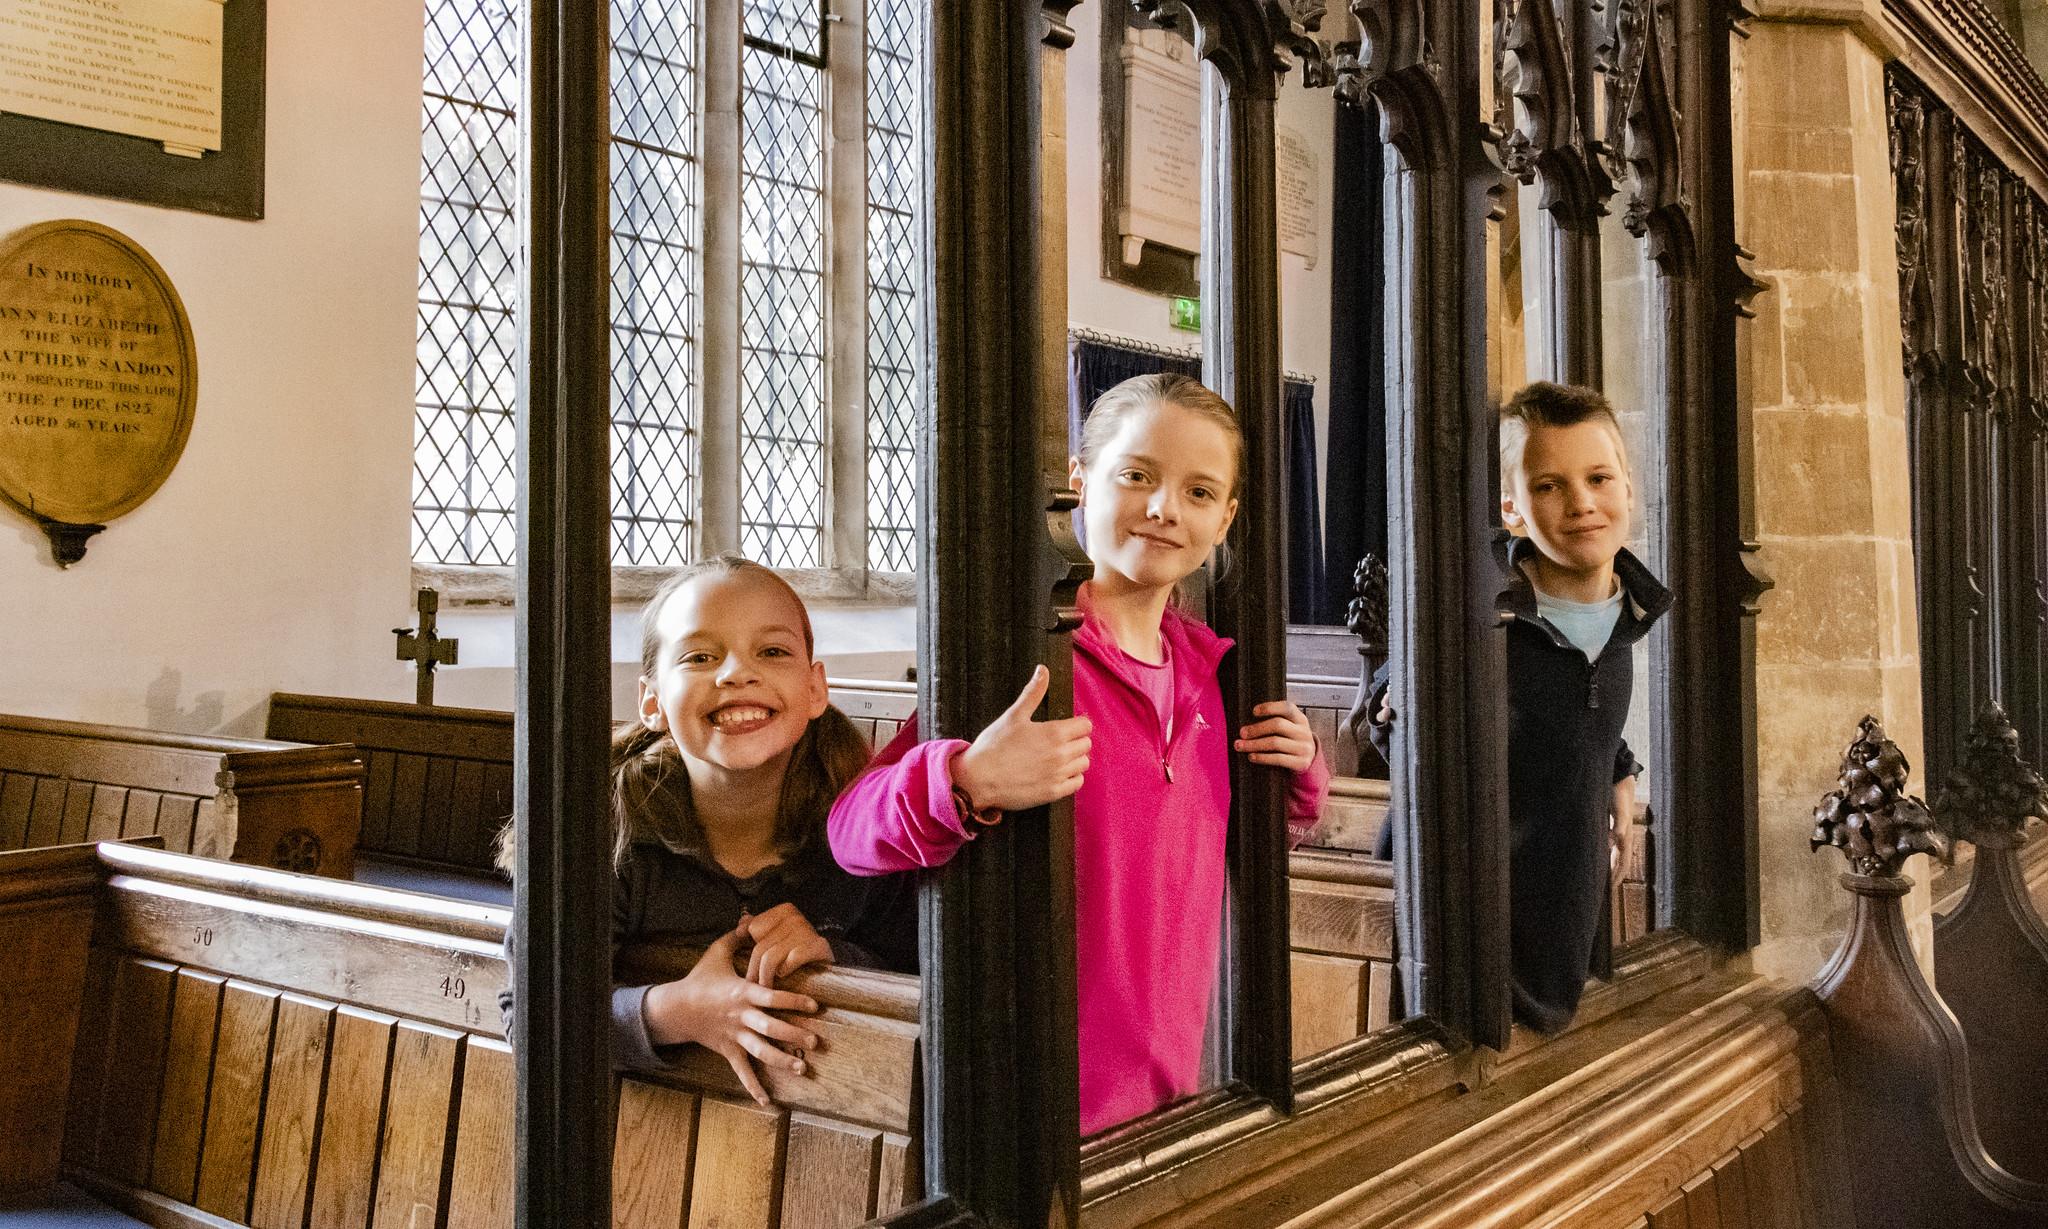 Children enjoying St Mary's church, Horncastle, Lincolnshire